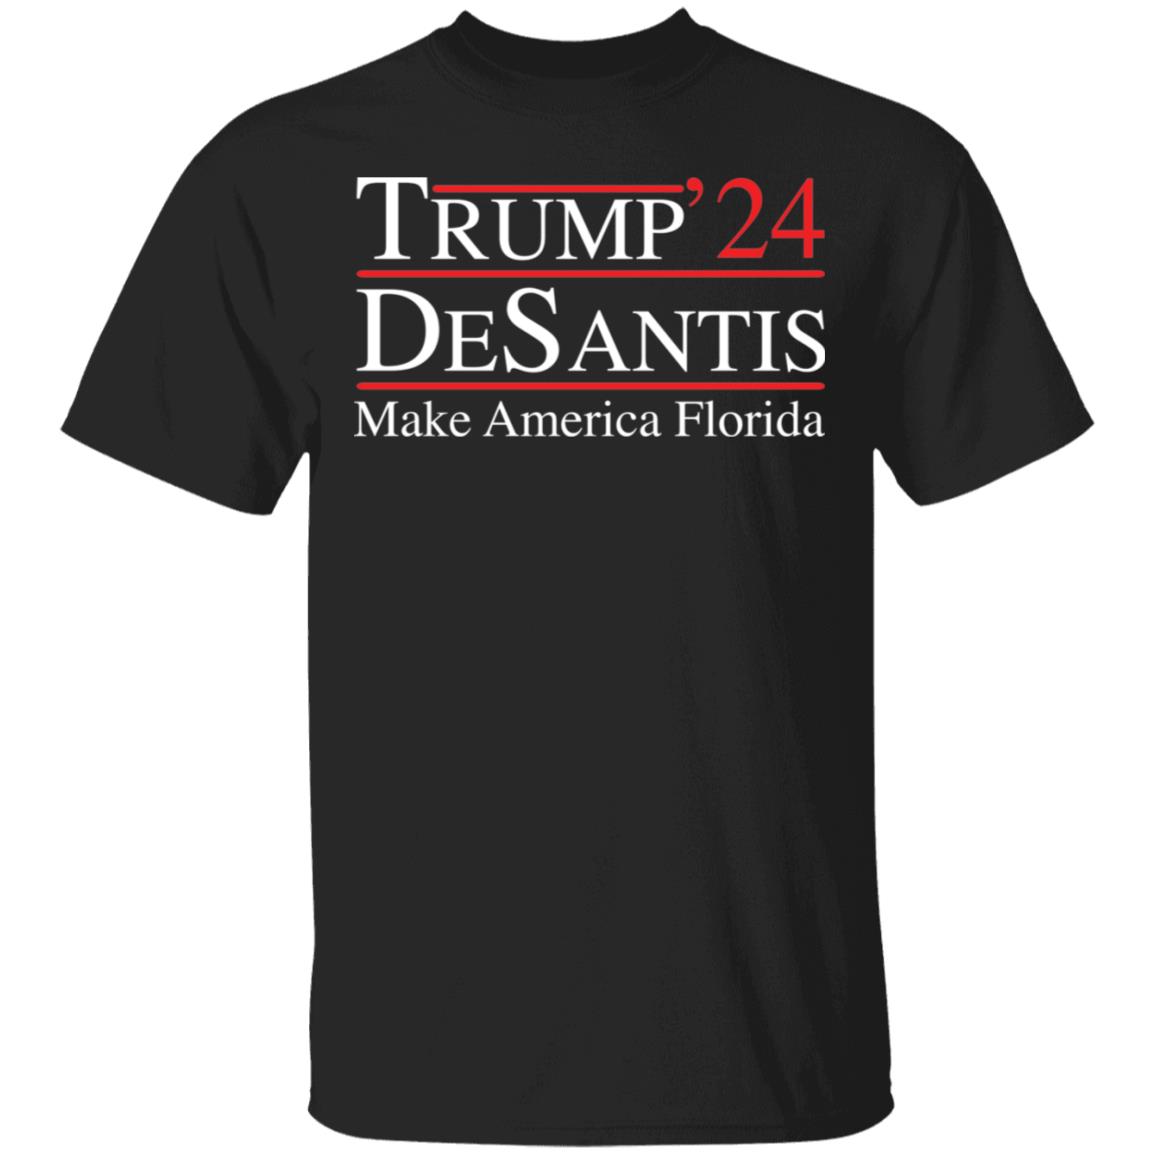 Trump Desantis 24 Make America Florida Shirt